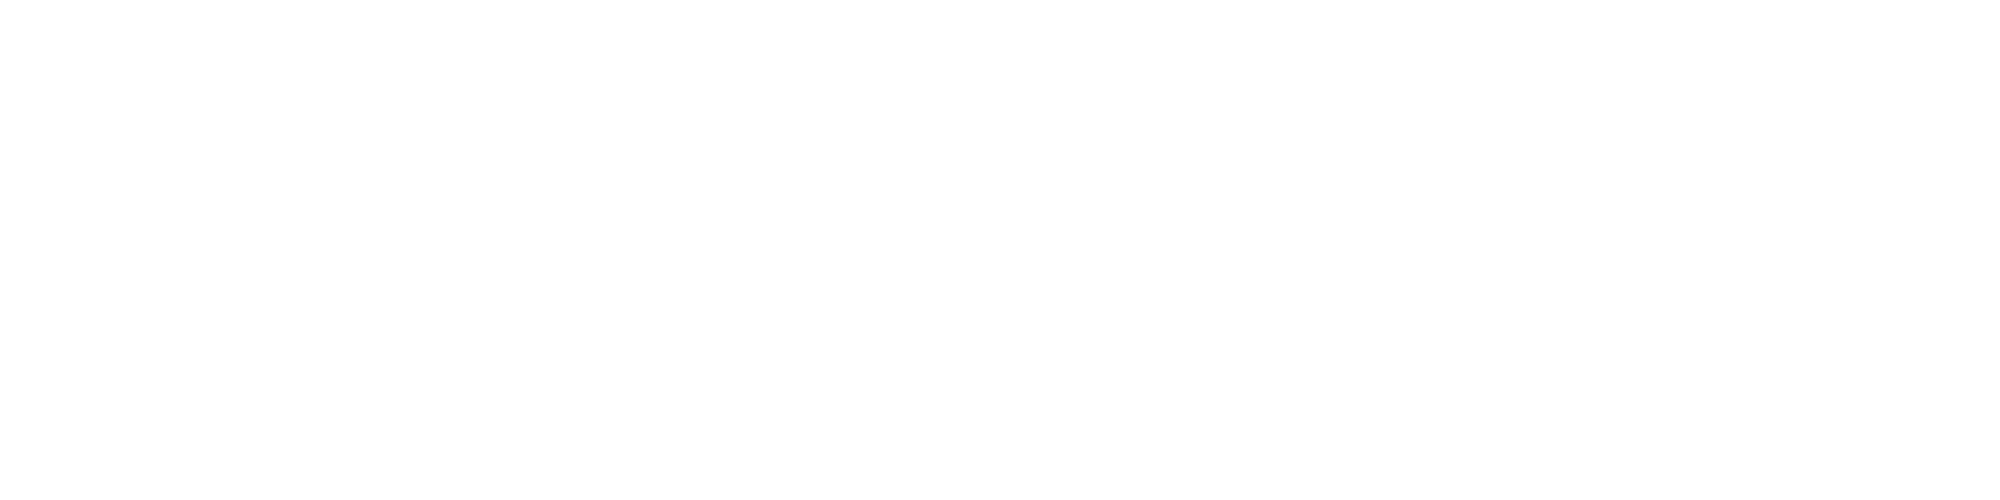 bullishow.com